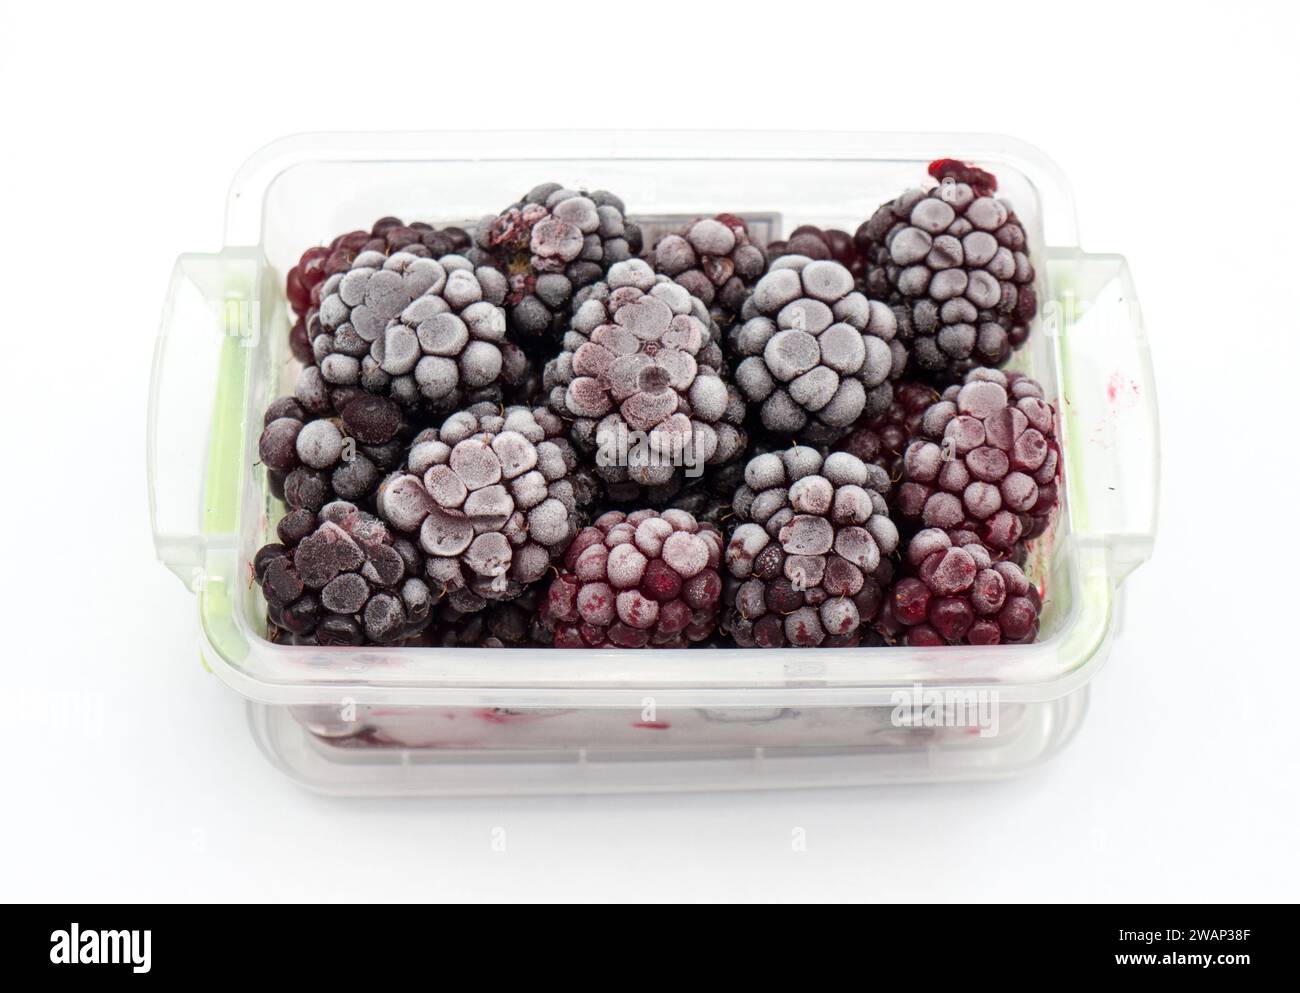 Frozen blackberry. Stock Photo